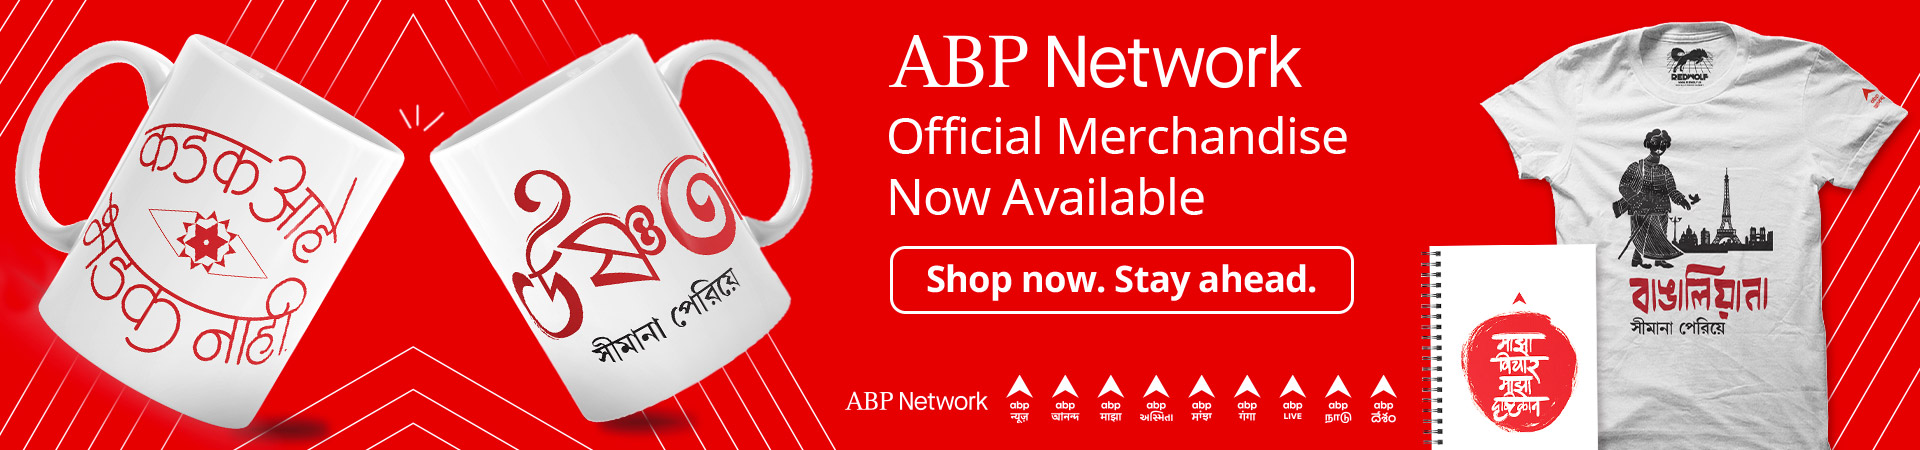 ABP Network - Official Merchandise